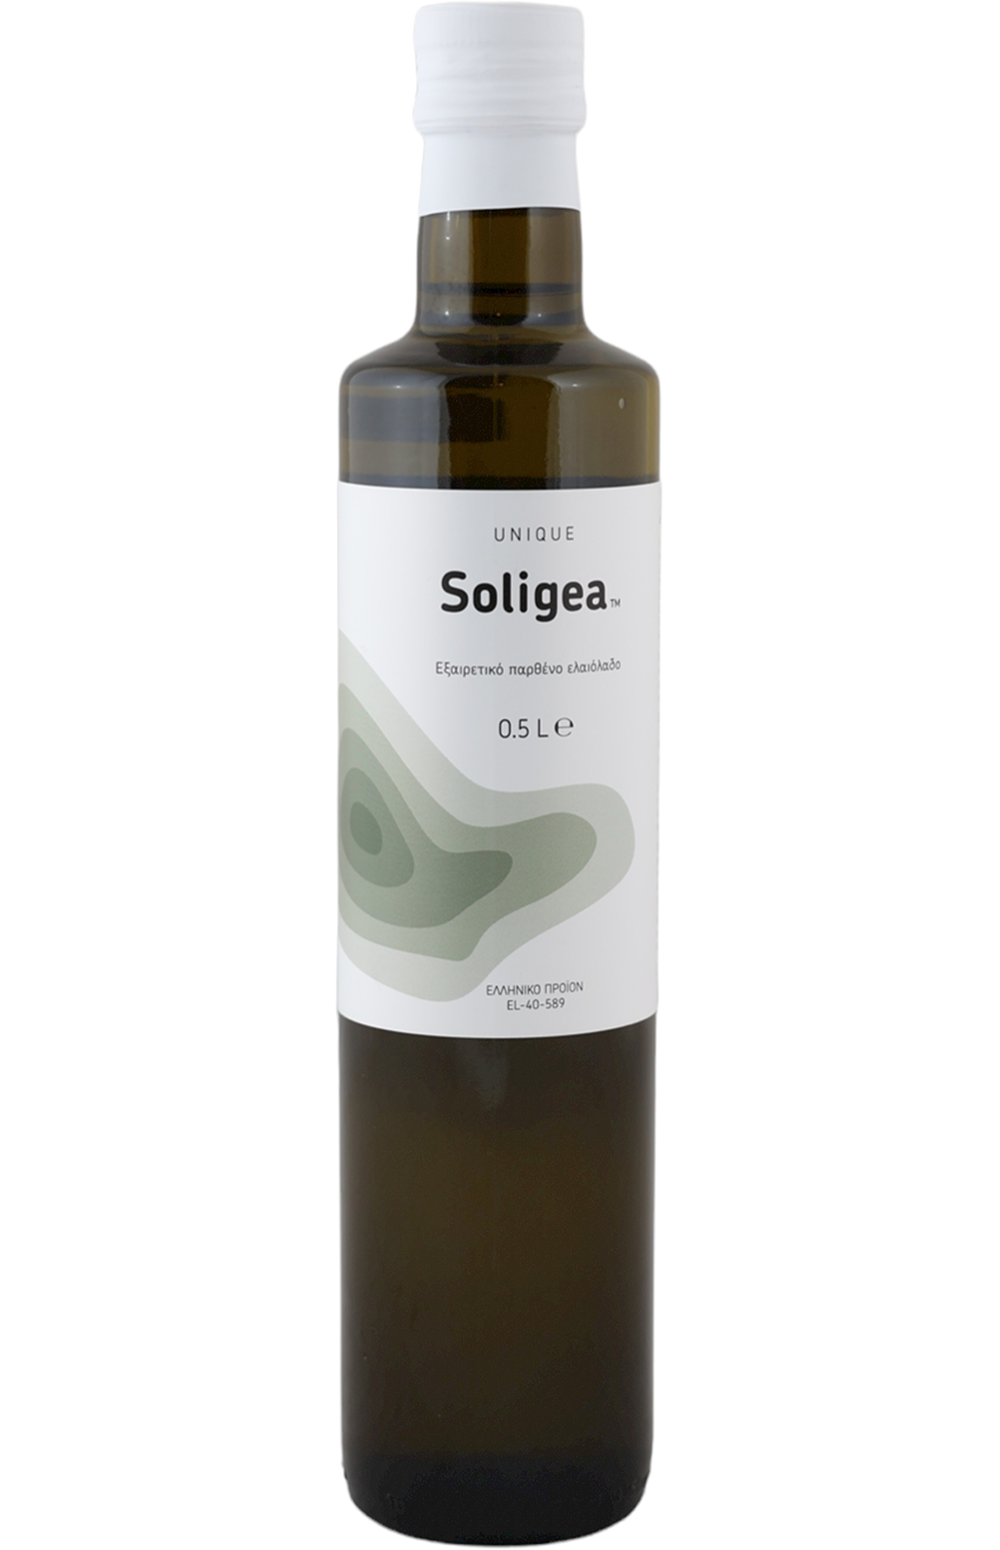 Soligea Unique Olive Oil